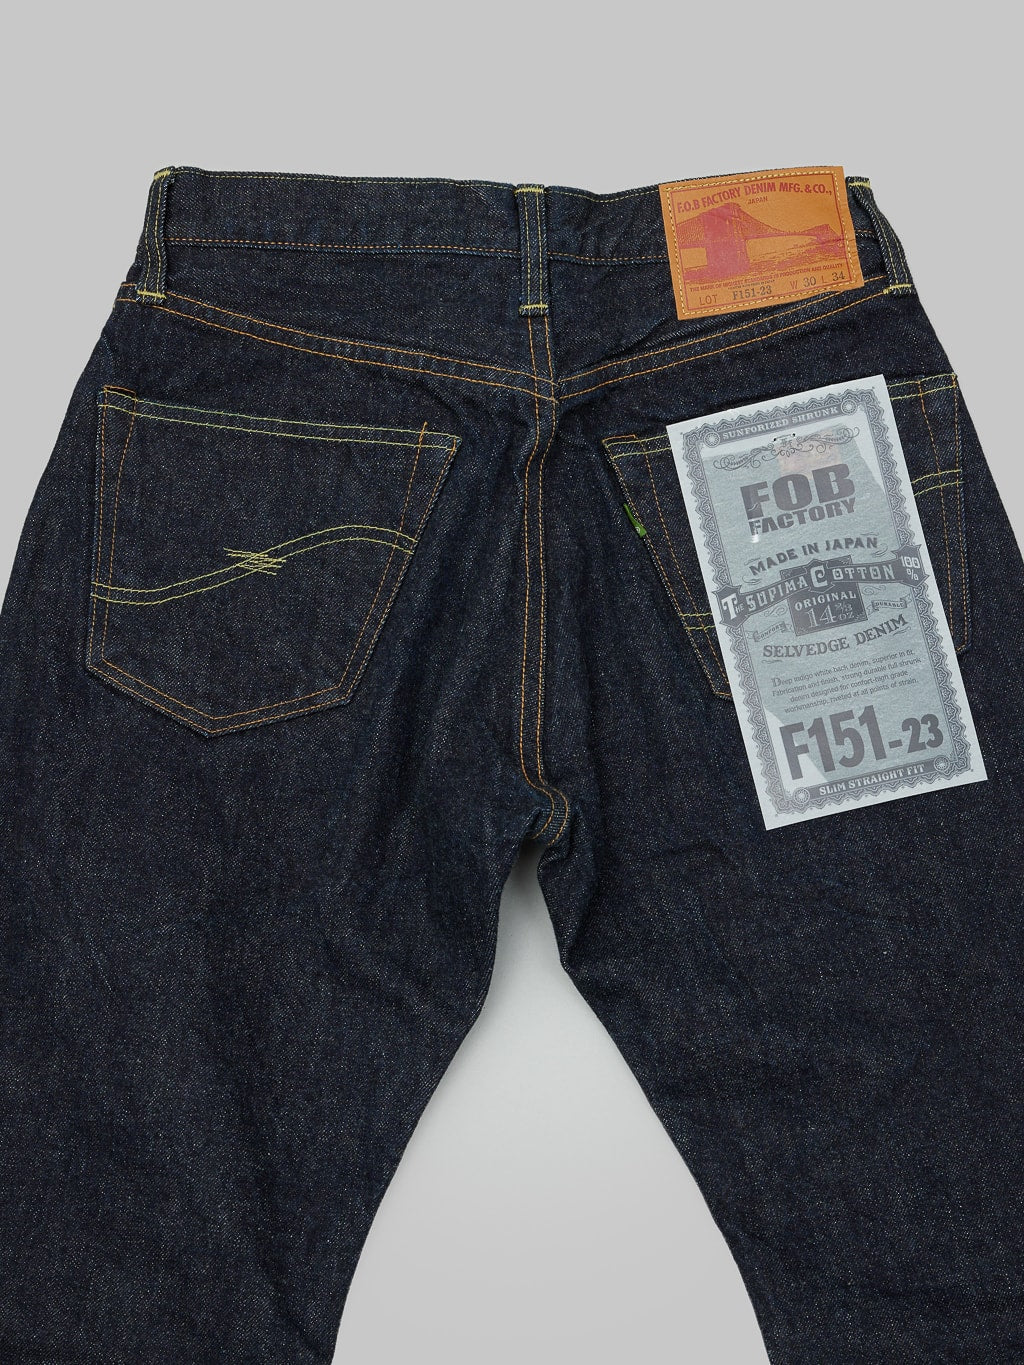 Fob factory slim straight denim jeans back view